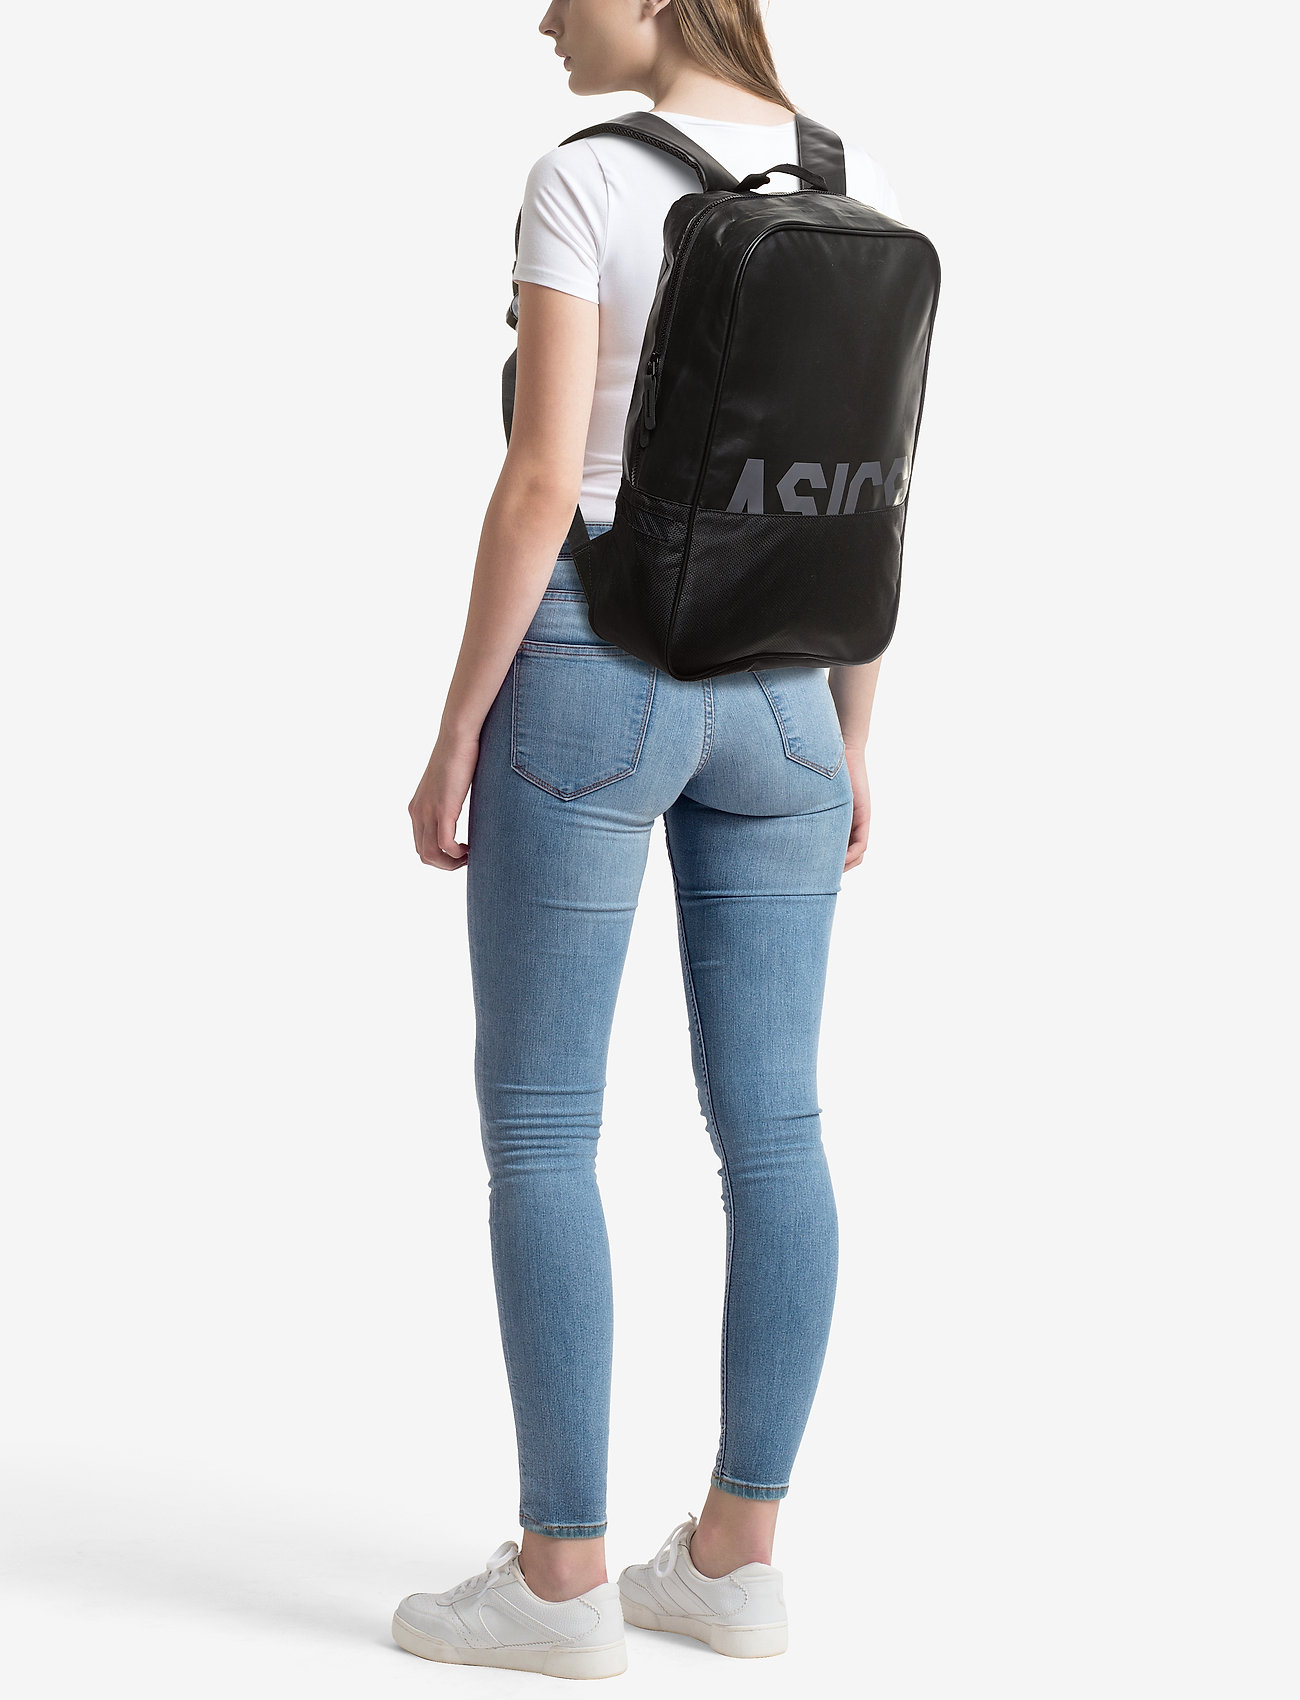 asics tr core backpack